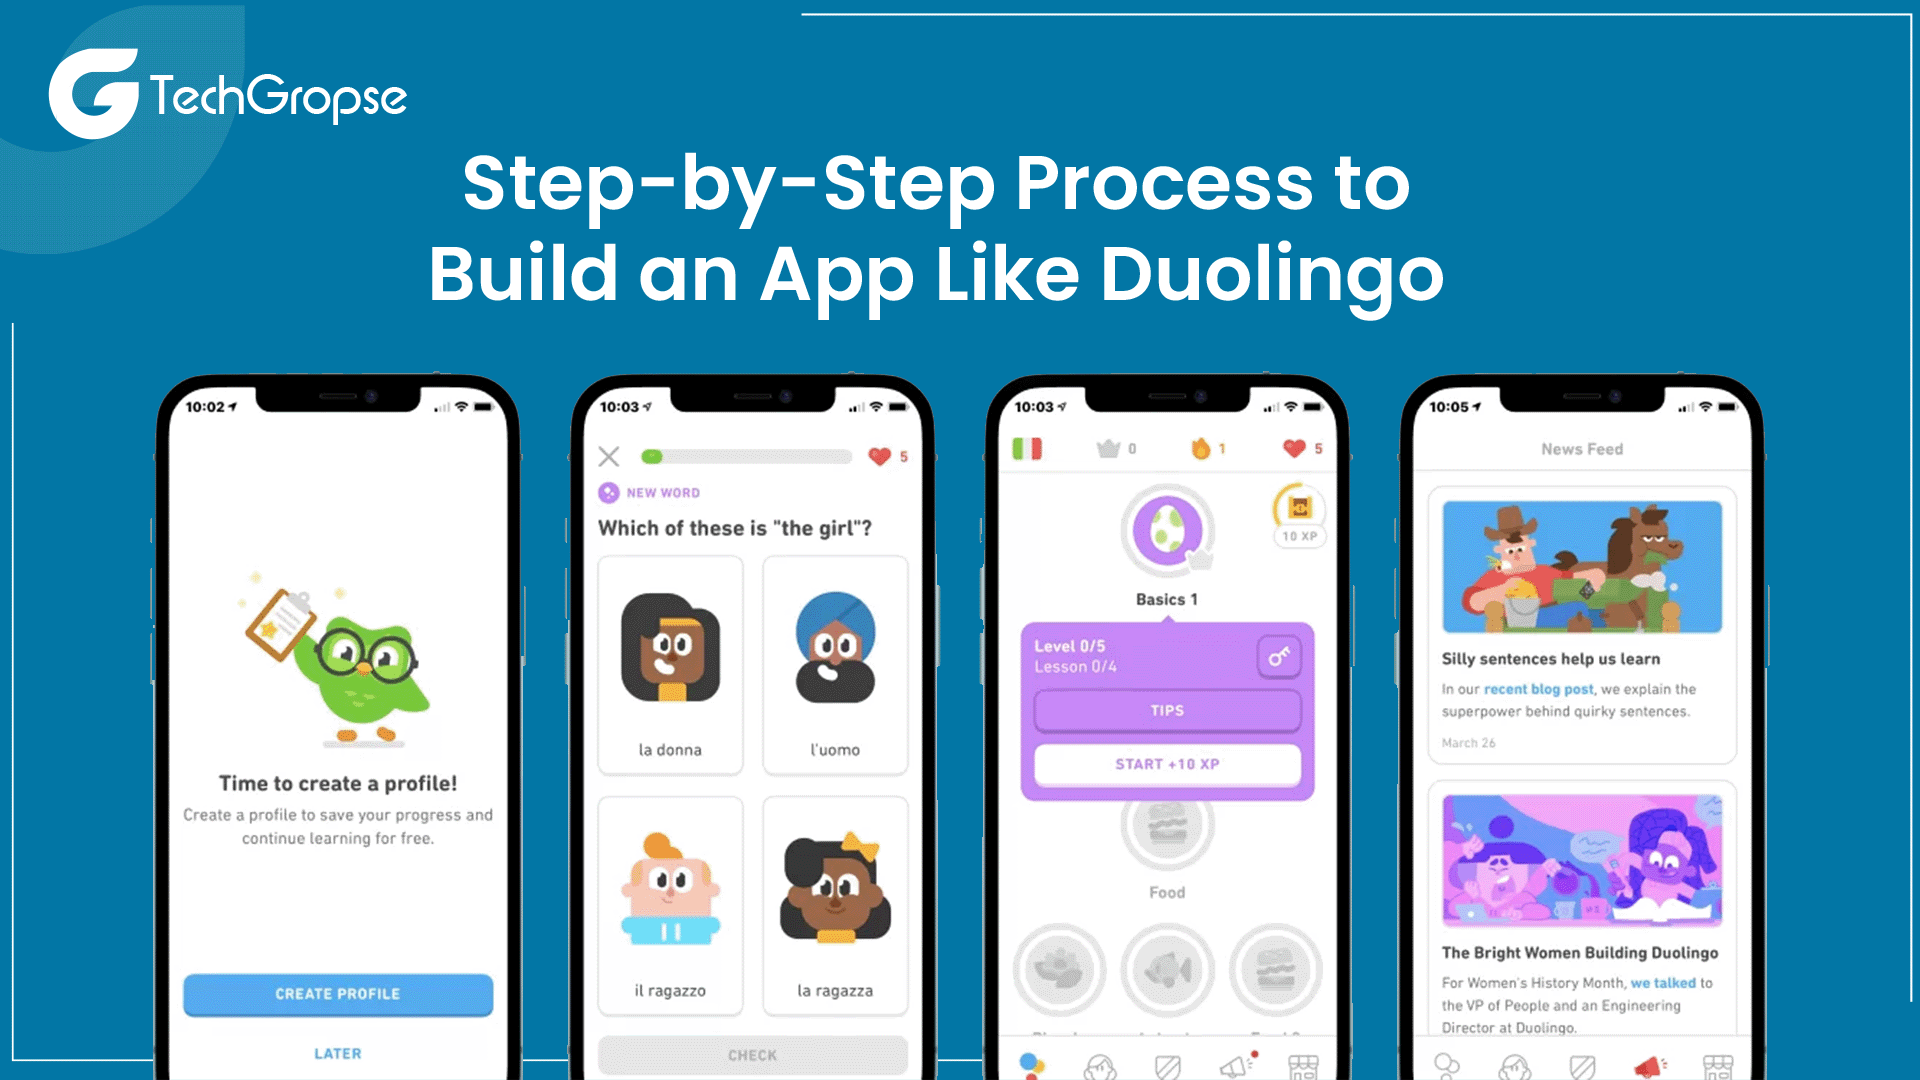 Step-by-Step Process to Build an App Like Duolingo